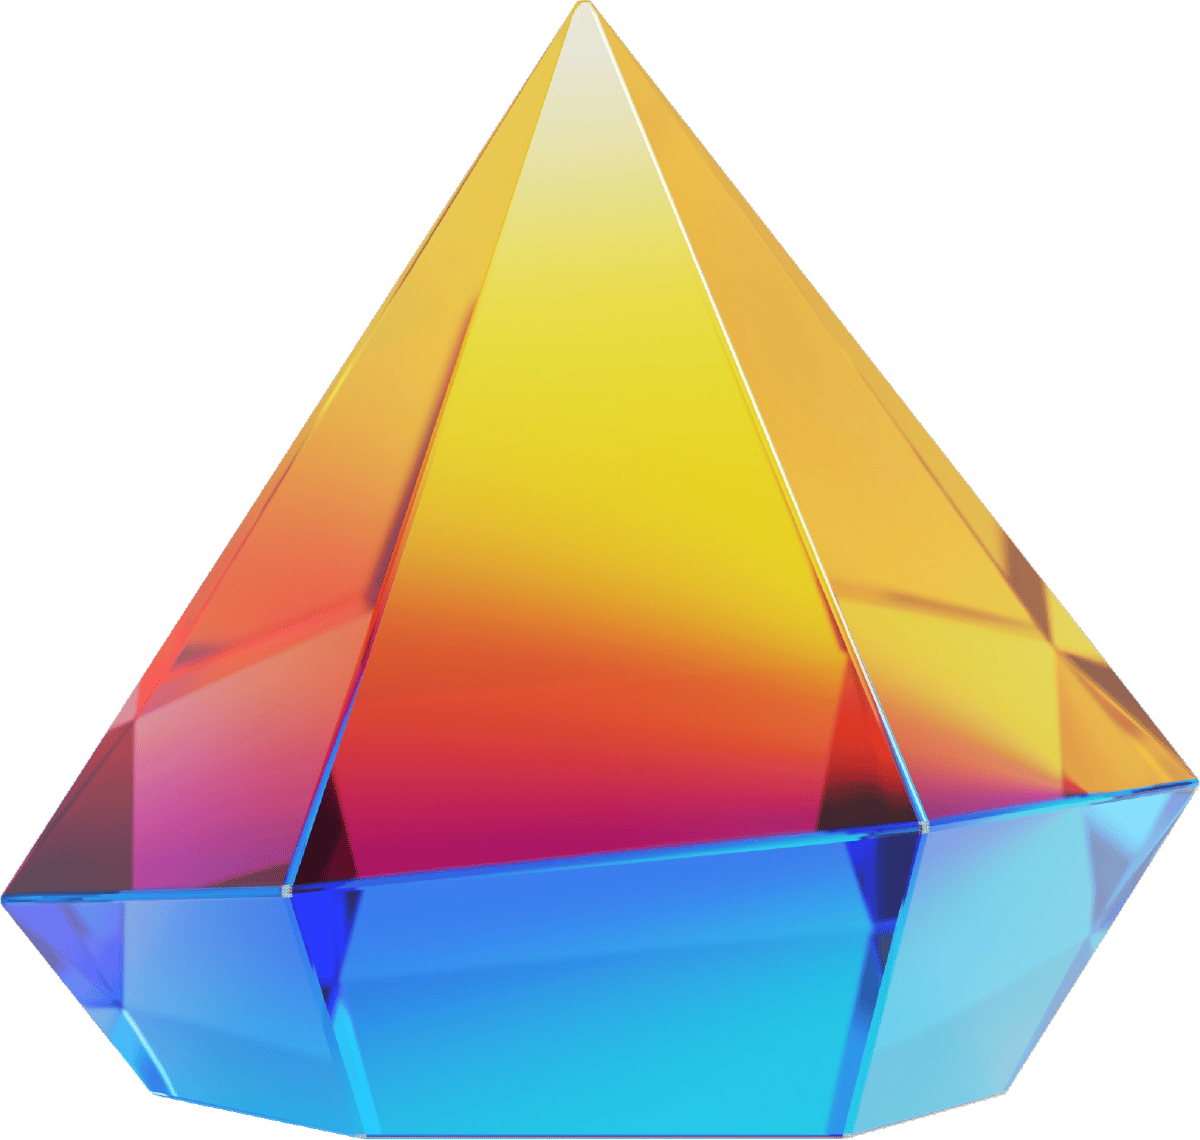 3D graphic of a colorful prism representing PRISMA